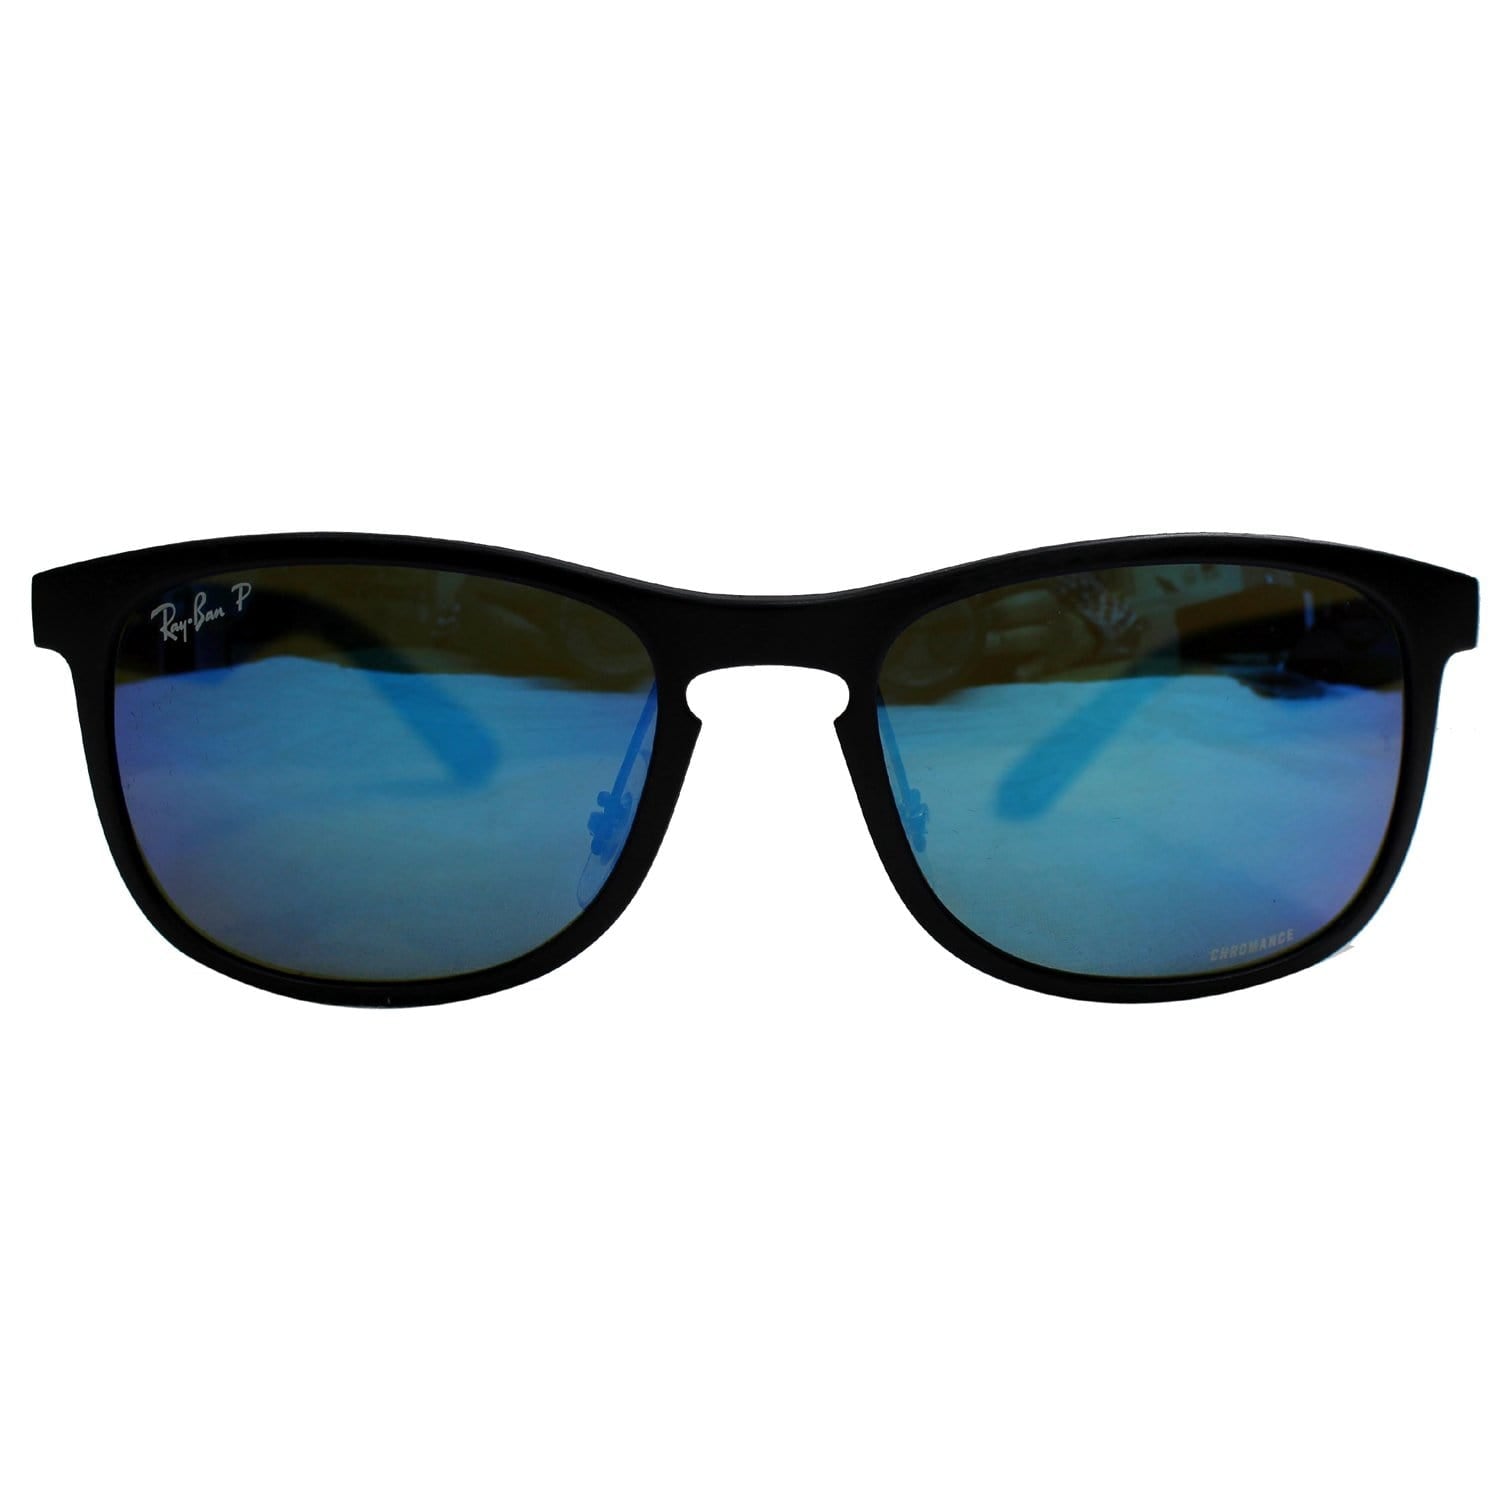 Ray Ban Rb4263 601s A1 Sunglasses Blue Flash Mirror Polarized Chromanc